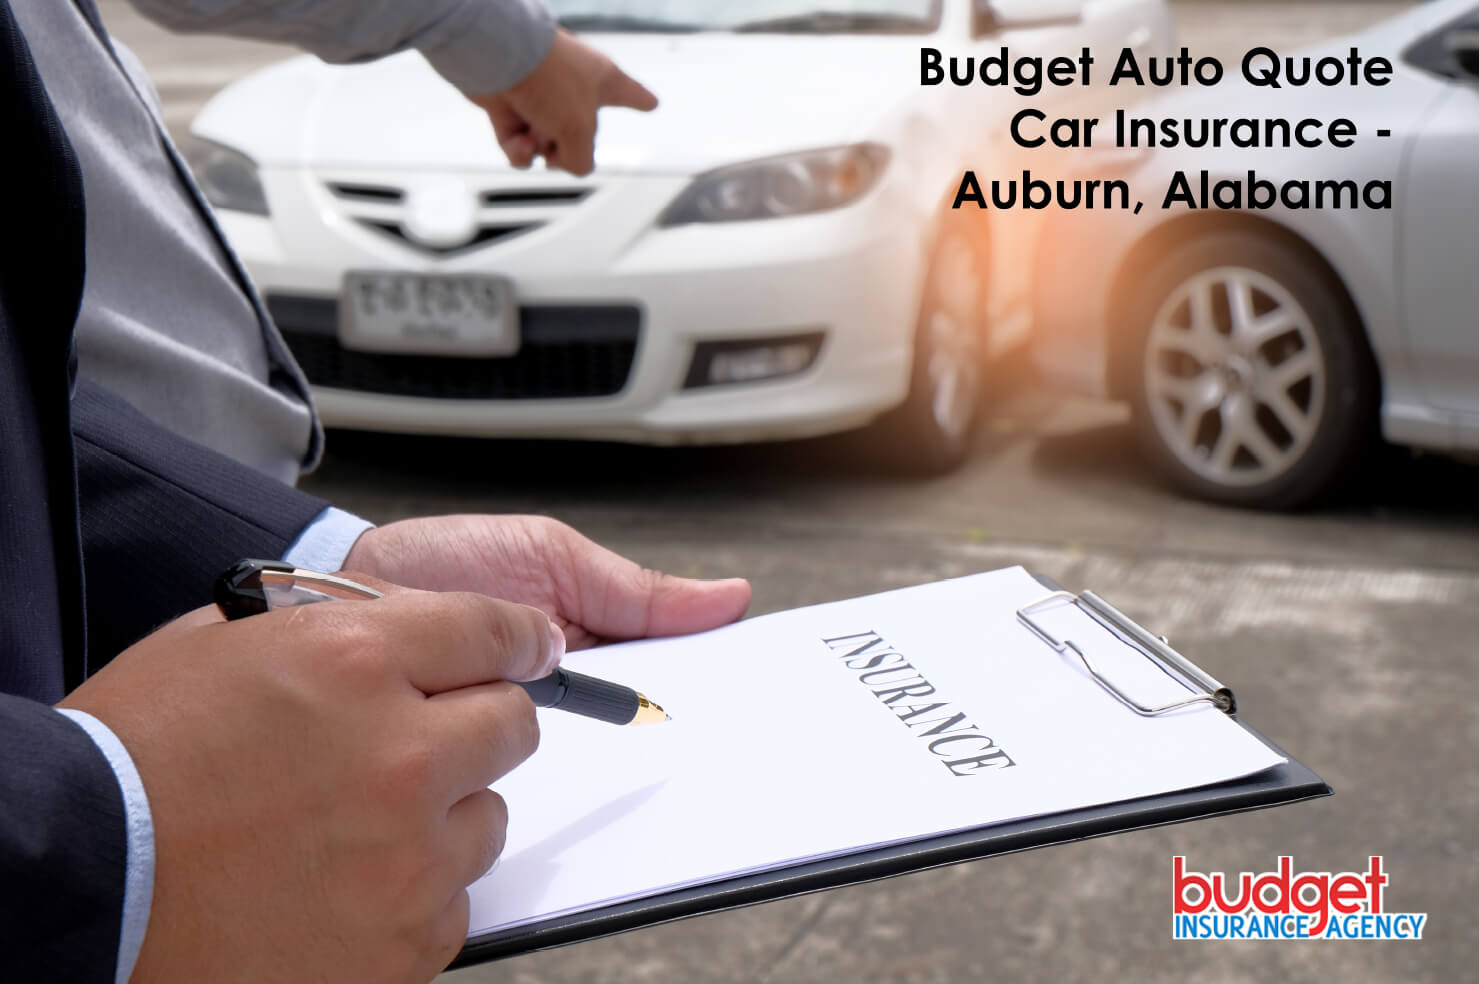 Budget Auto Quote Car Insurance - Auburn, Alabama